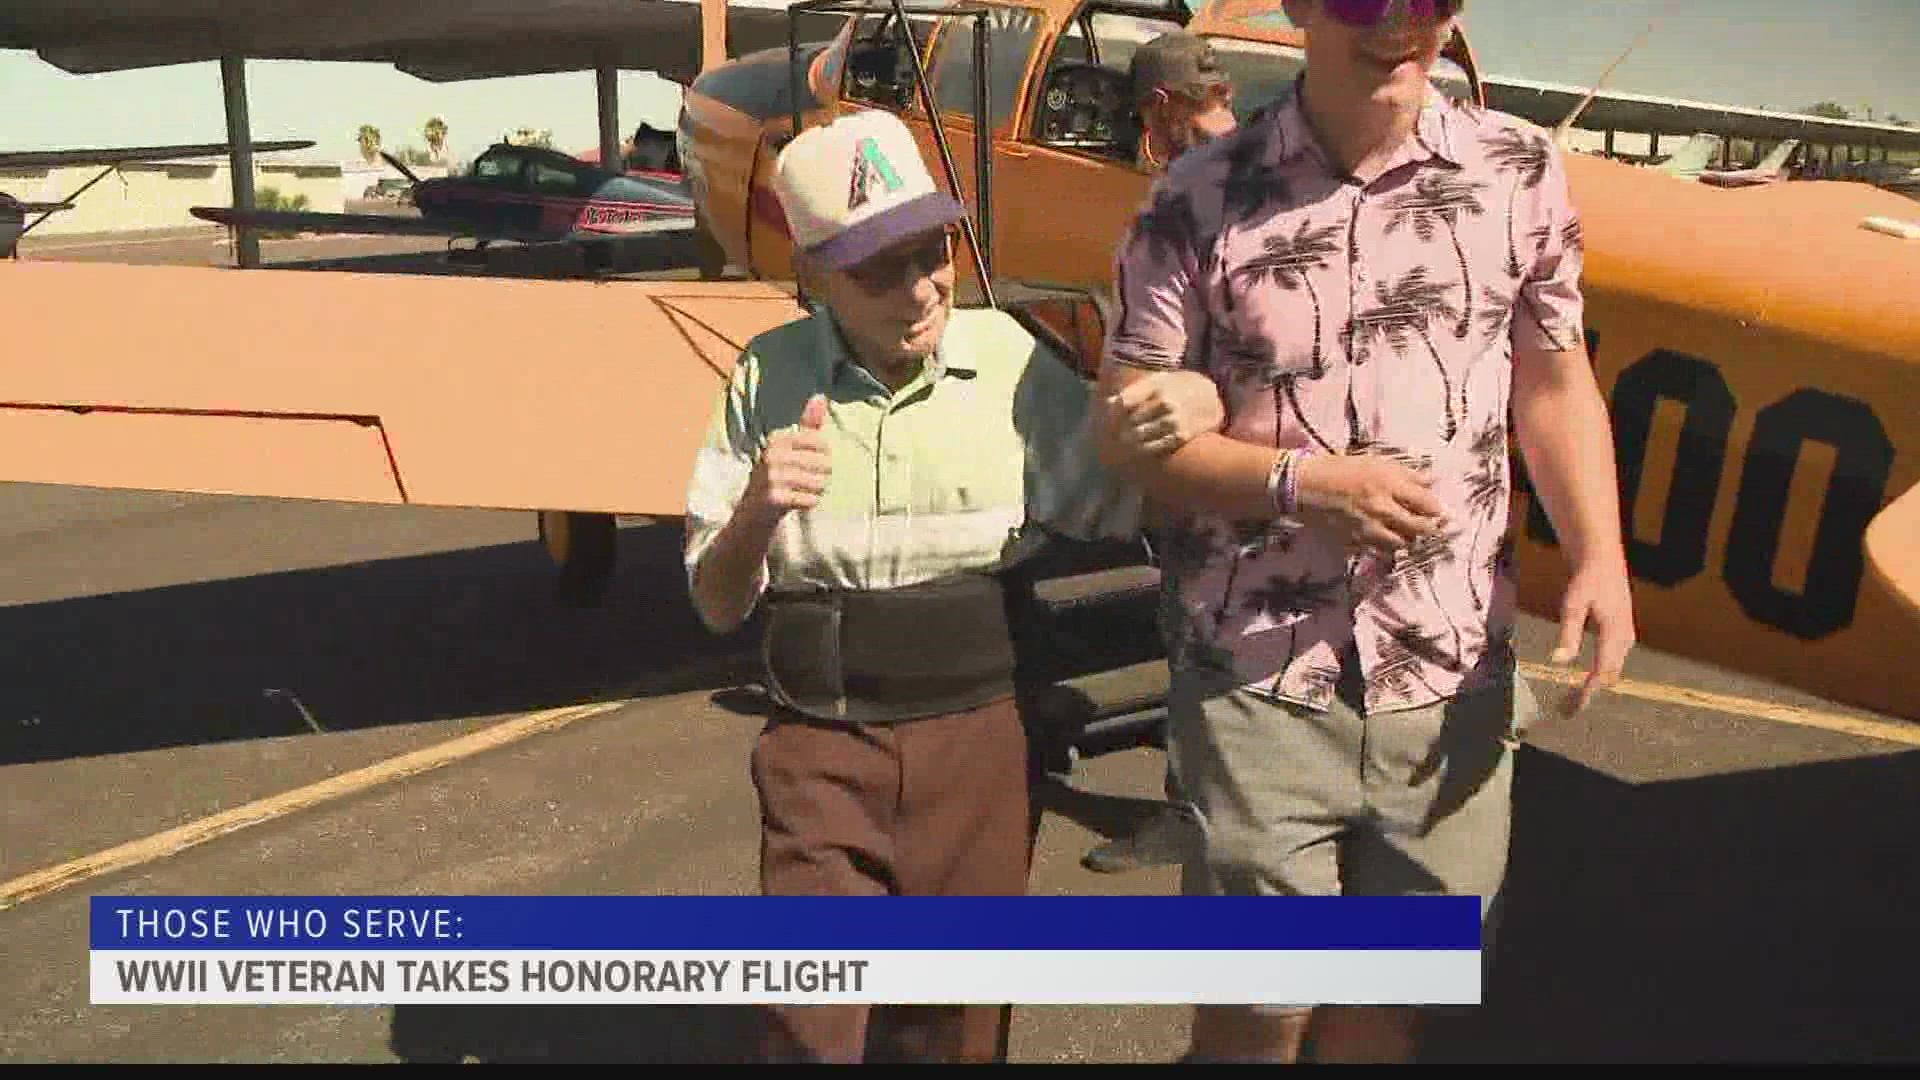 A World War II veteran from Queen Creek took a special flight in a war-era aircraft from Falcon Field Airport in Mesa this weekend.